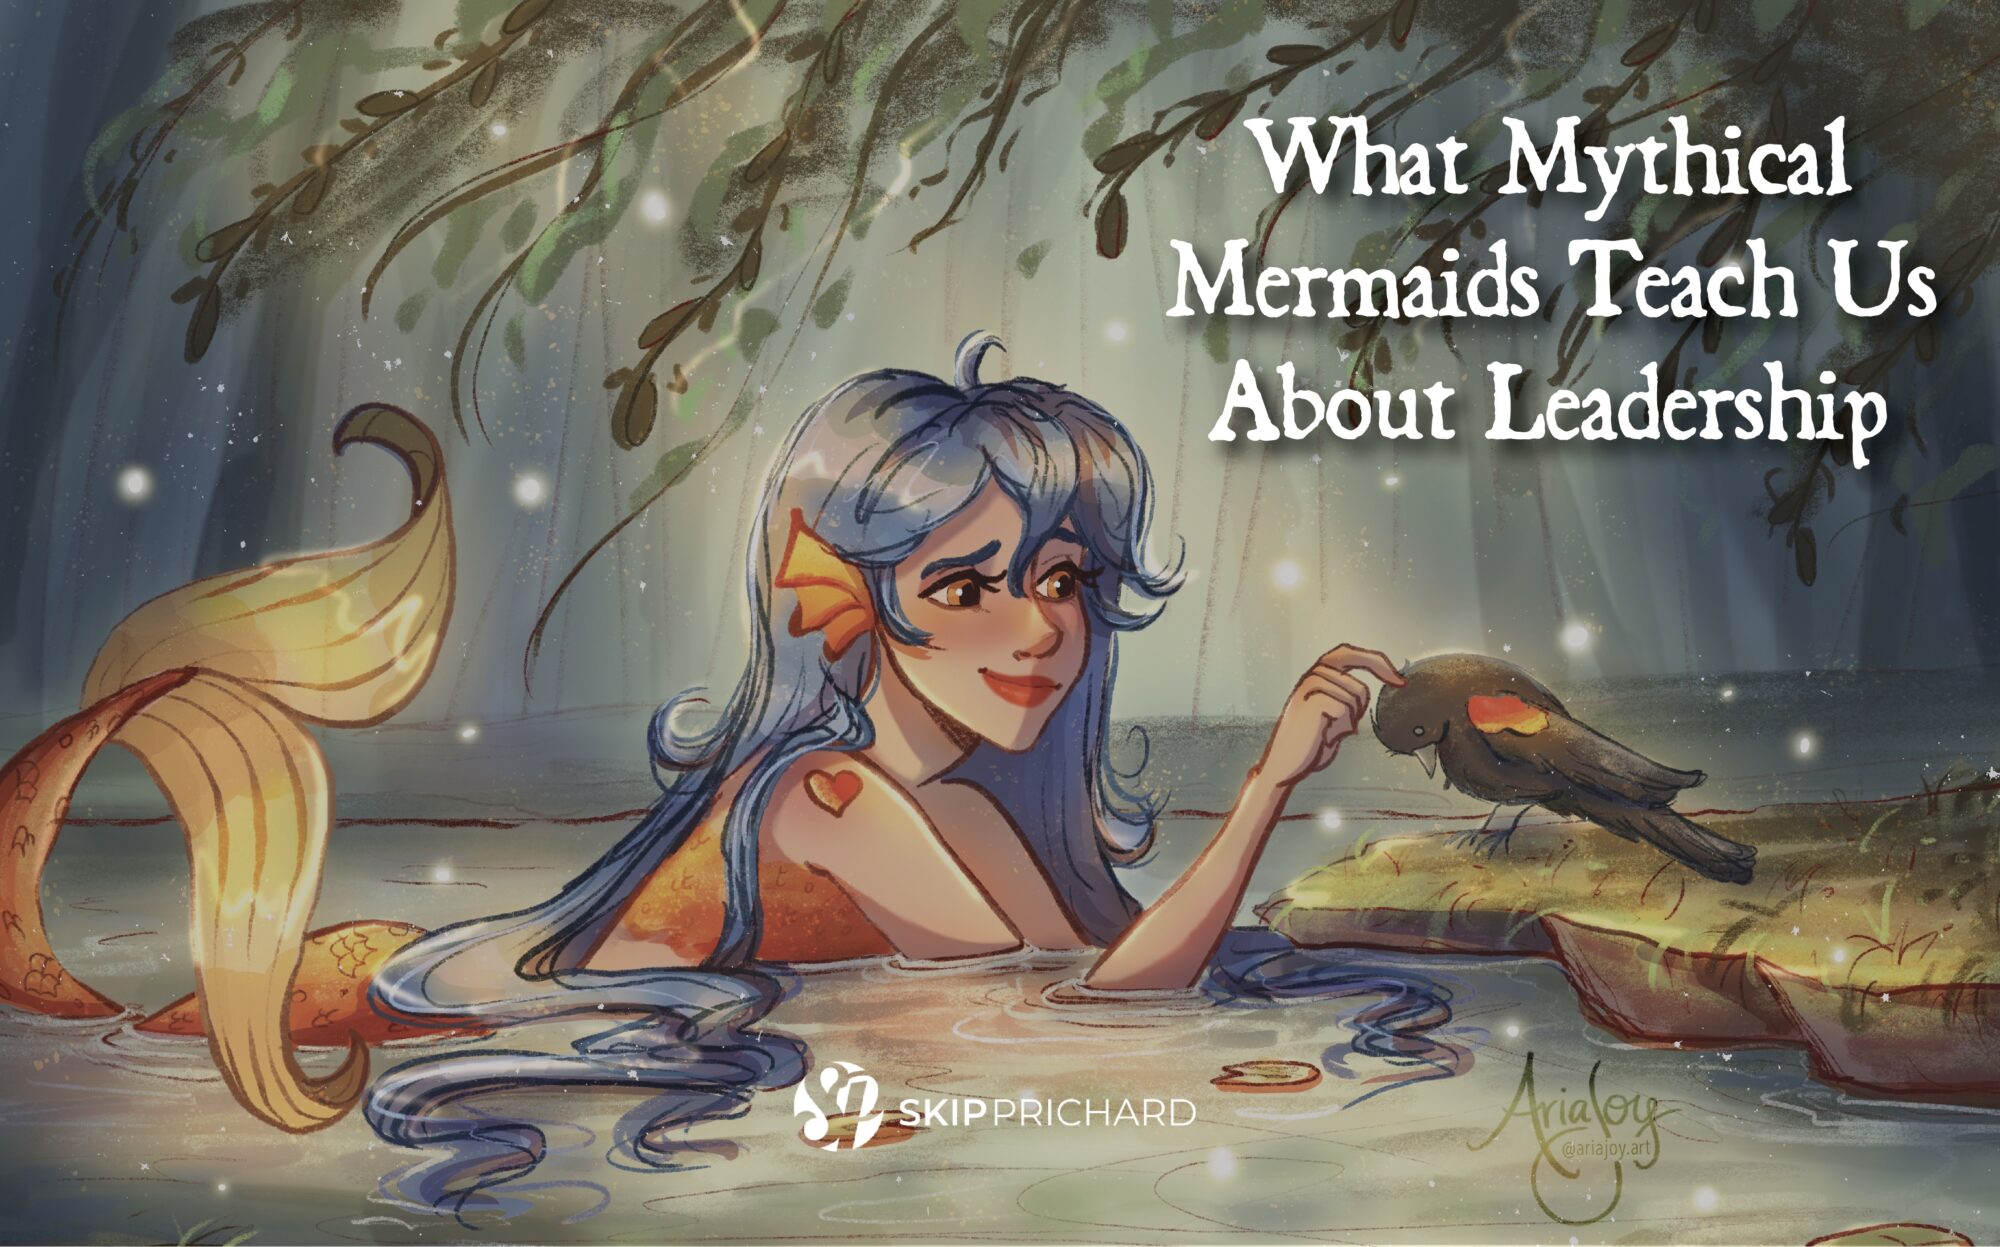 Mermaid Friends copyright Aria Joy